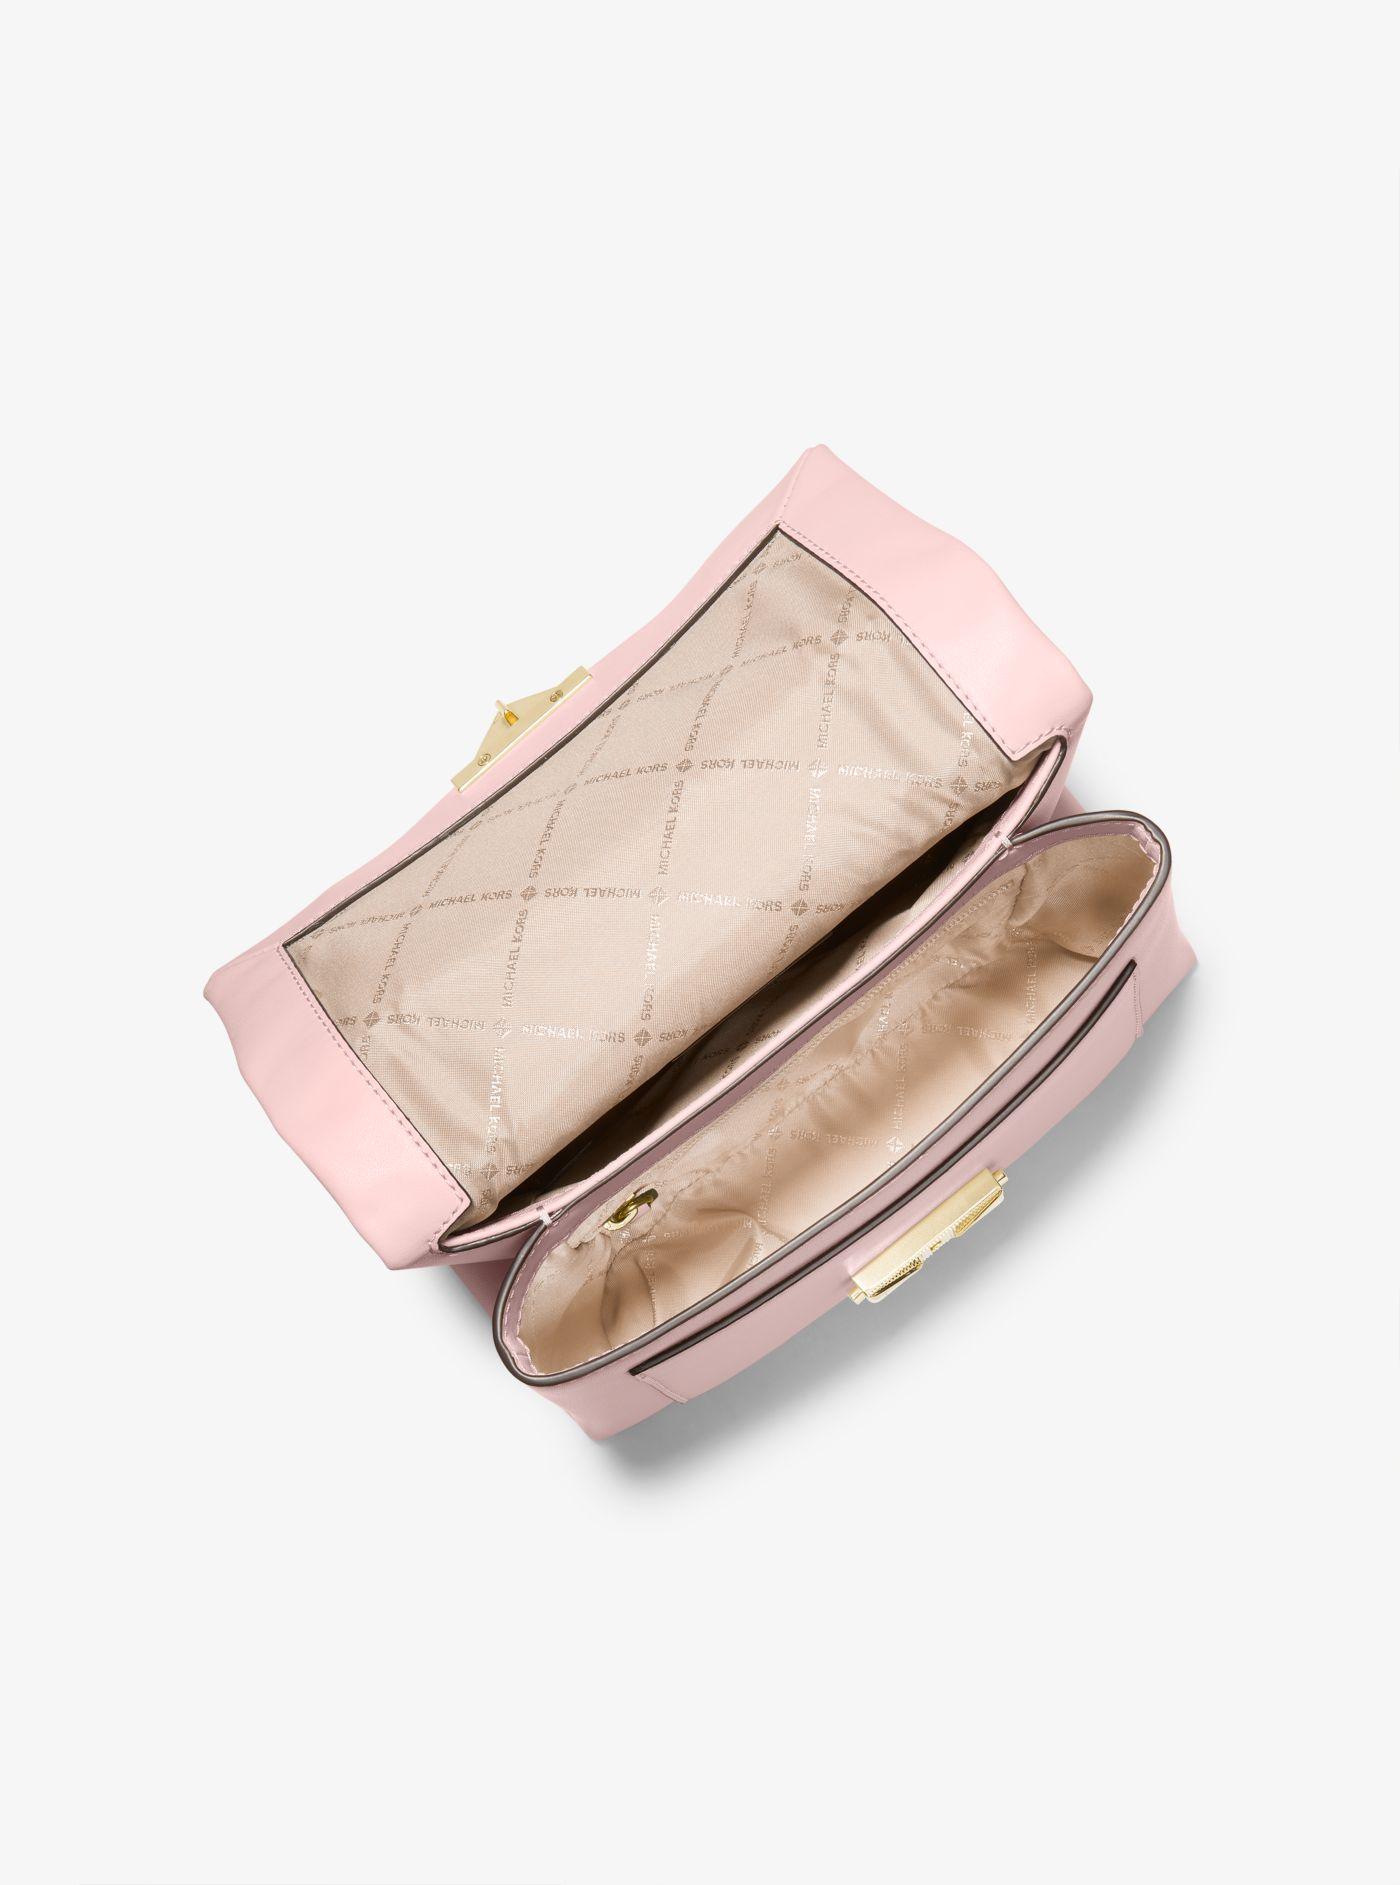 Michael Kors Cece Medium Faux Leather Shoulder Bag in Pink | Lyst